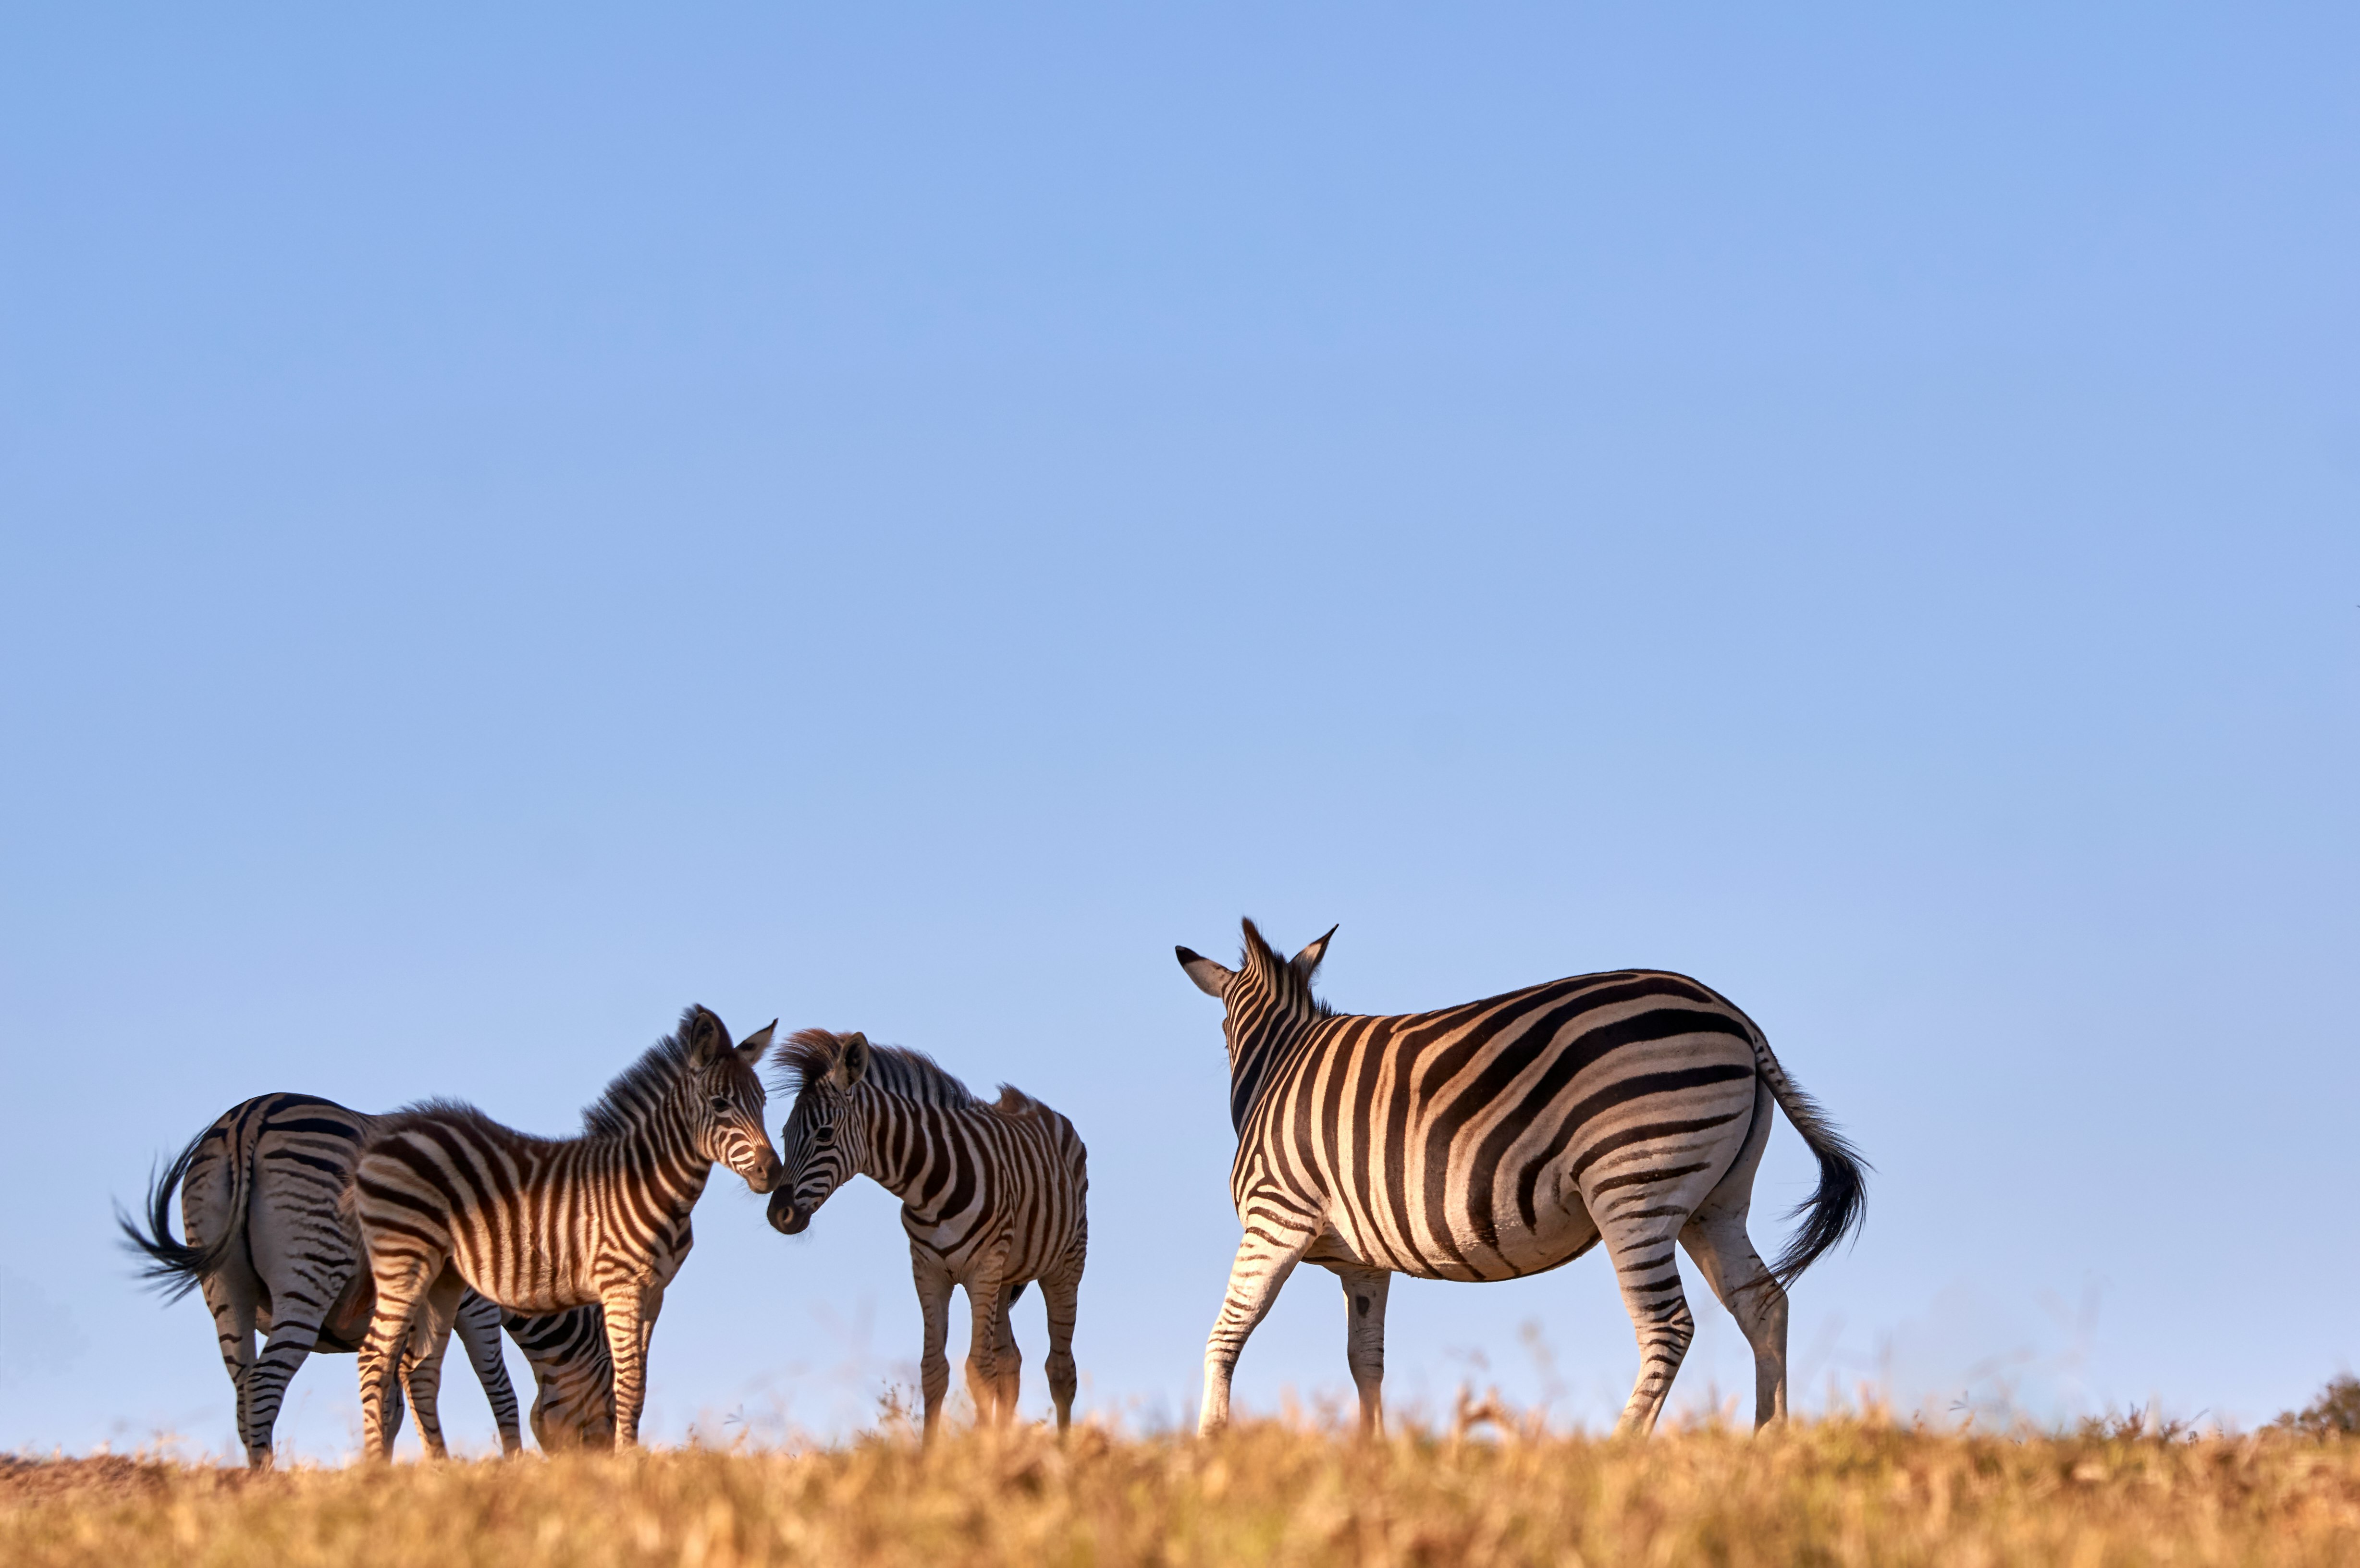 four zebras standing on grass